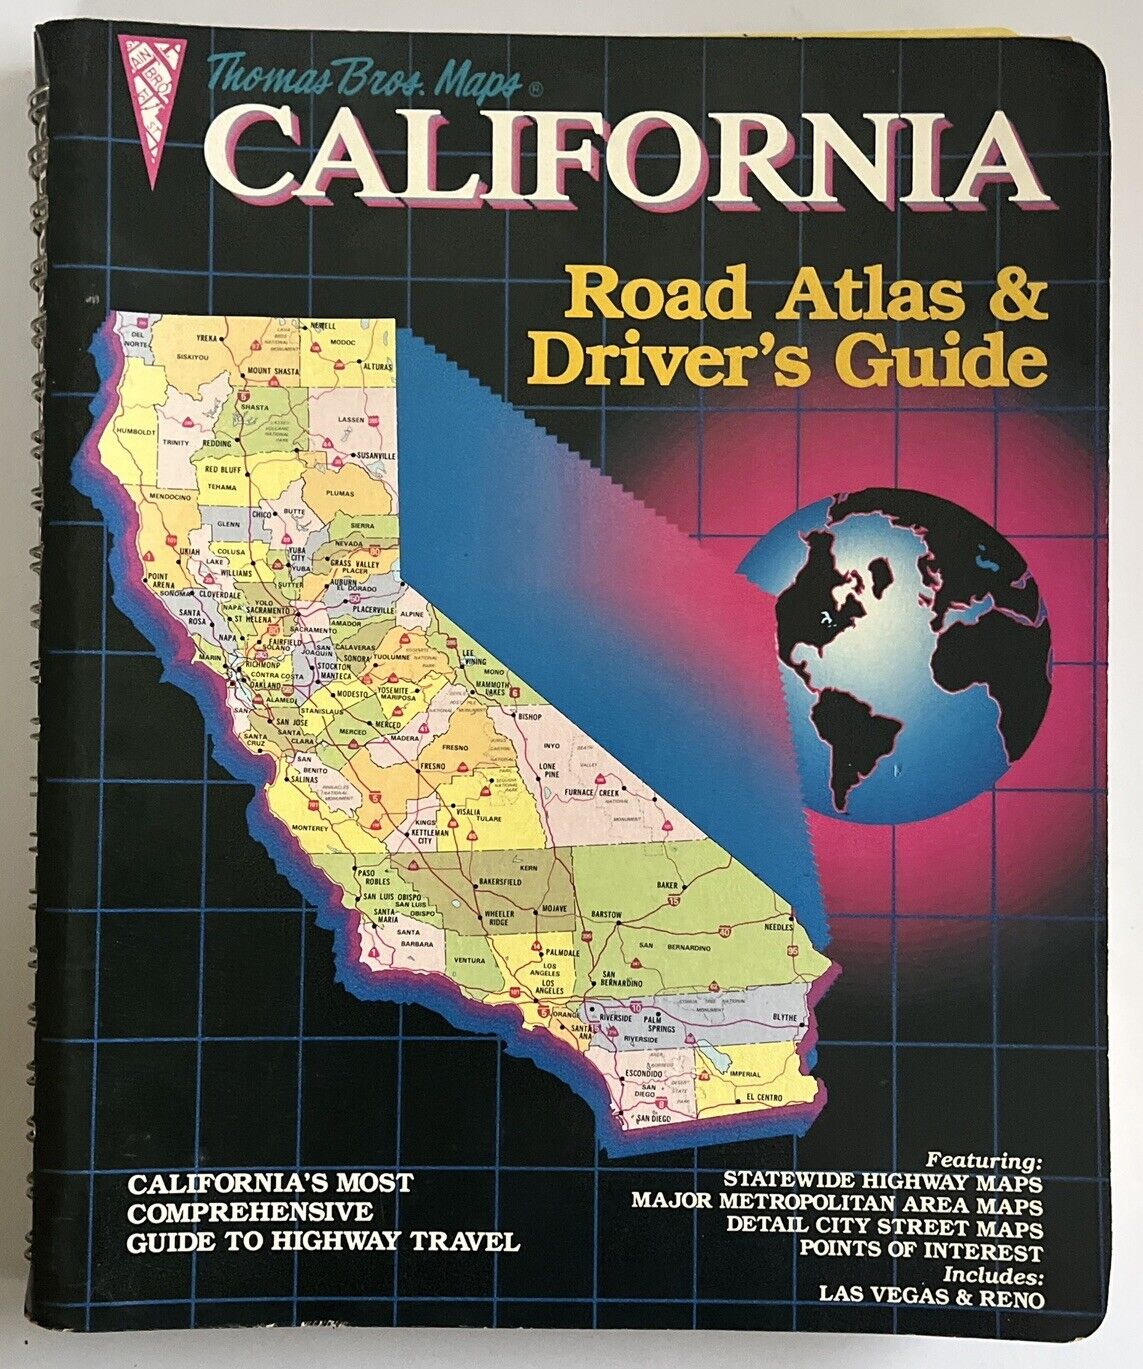 Thomas Bros Maps CALIFORNIA Road Atlas & Driver's Guide 1987 5th Edition